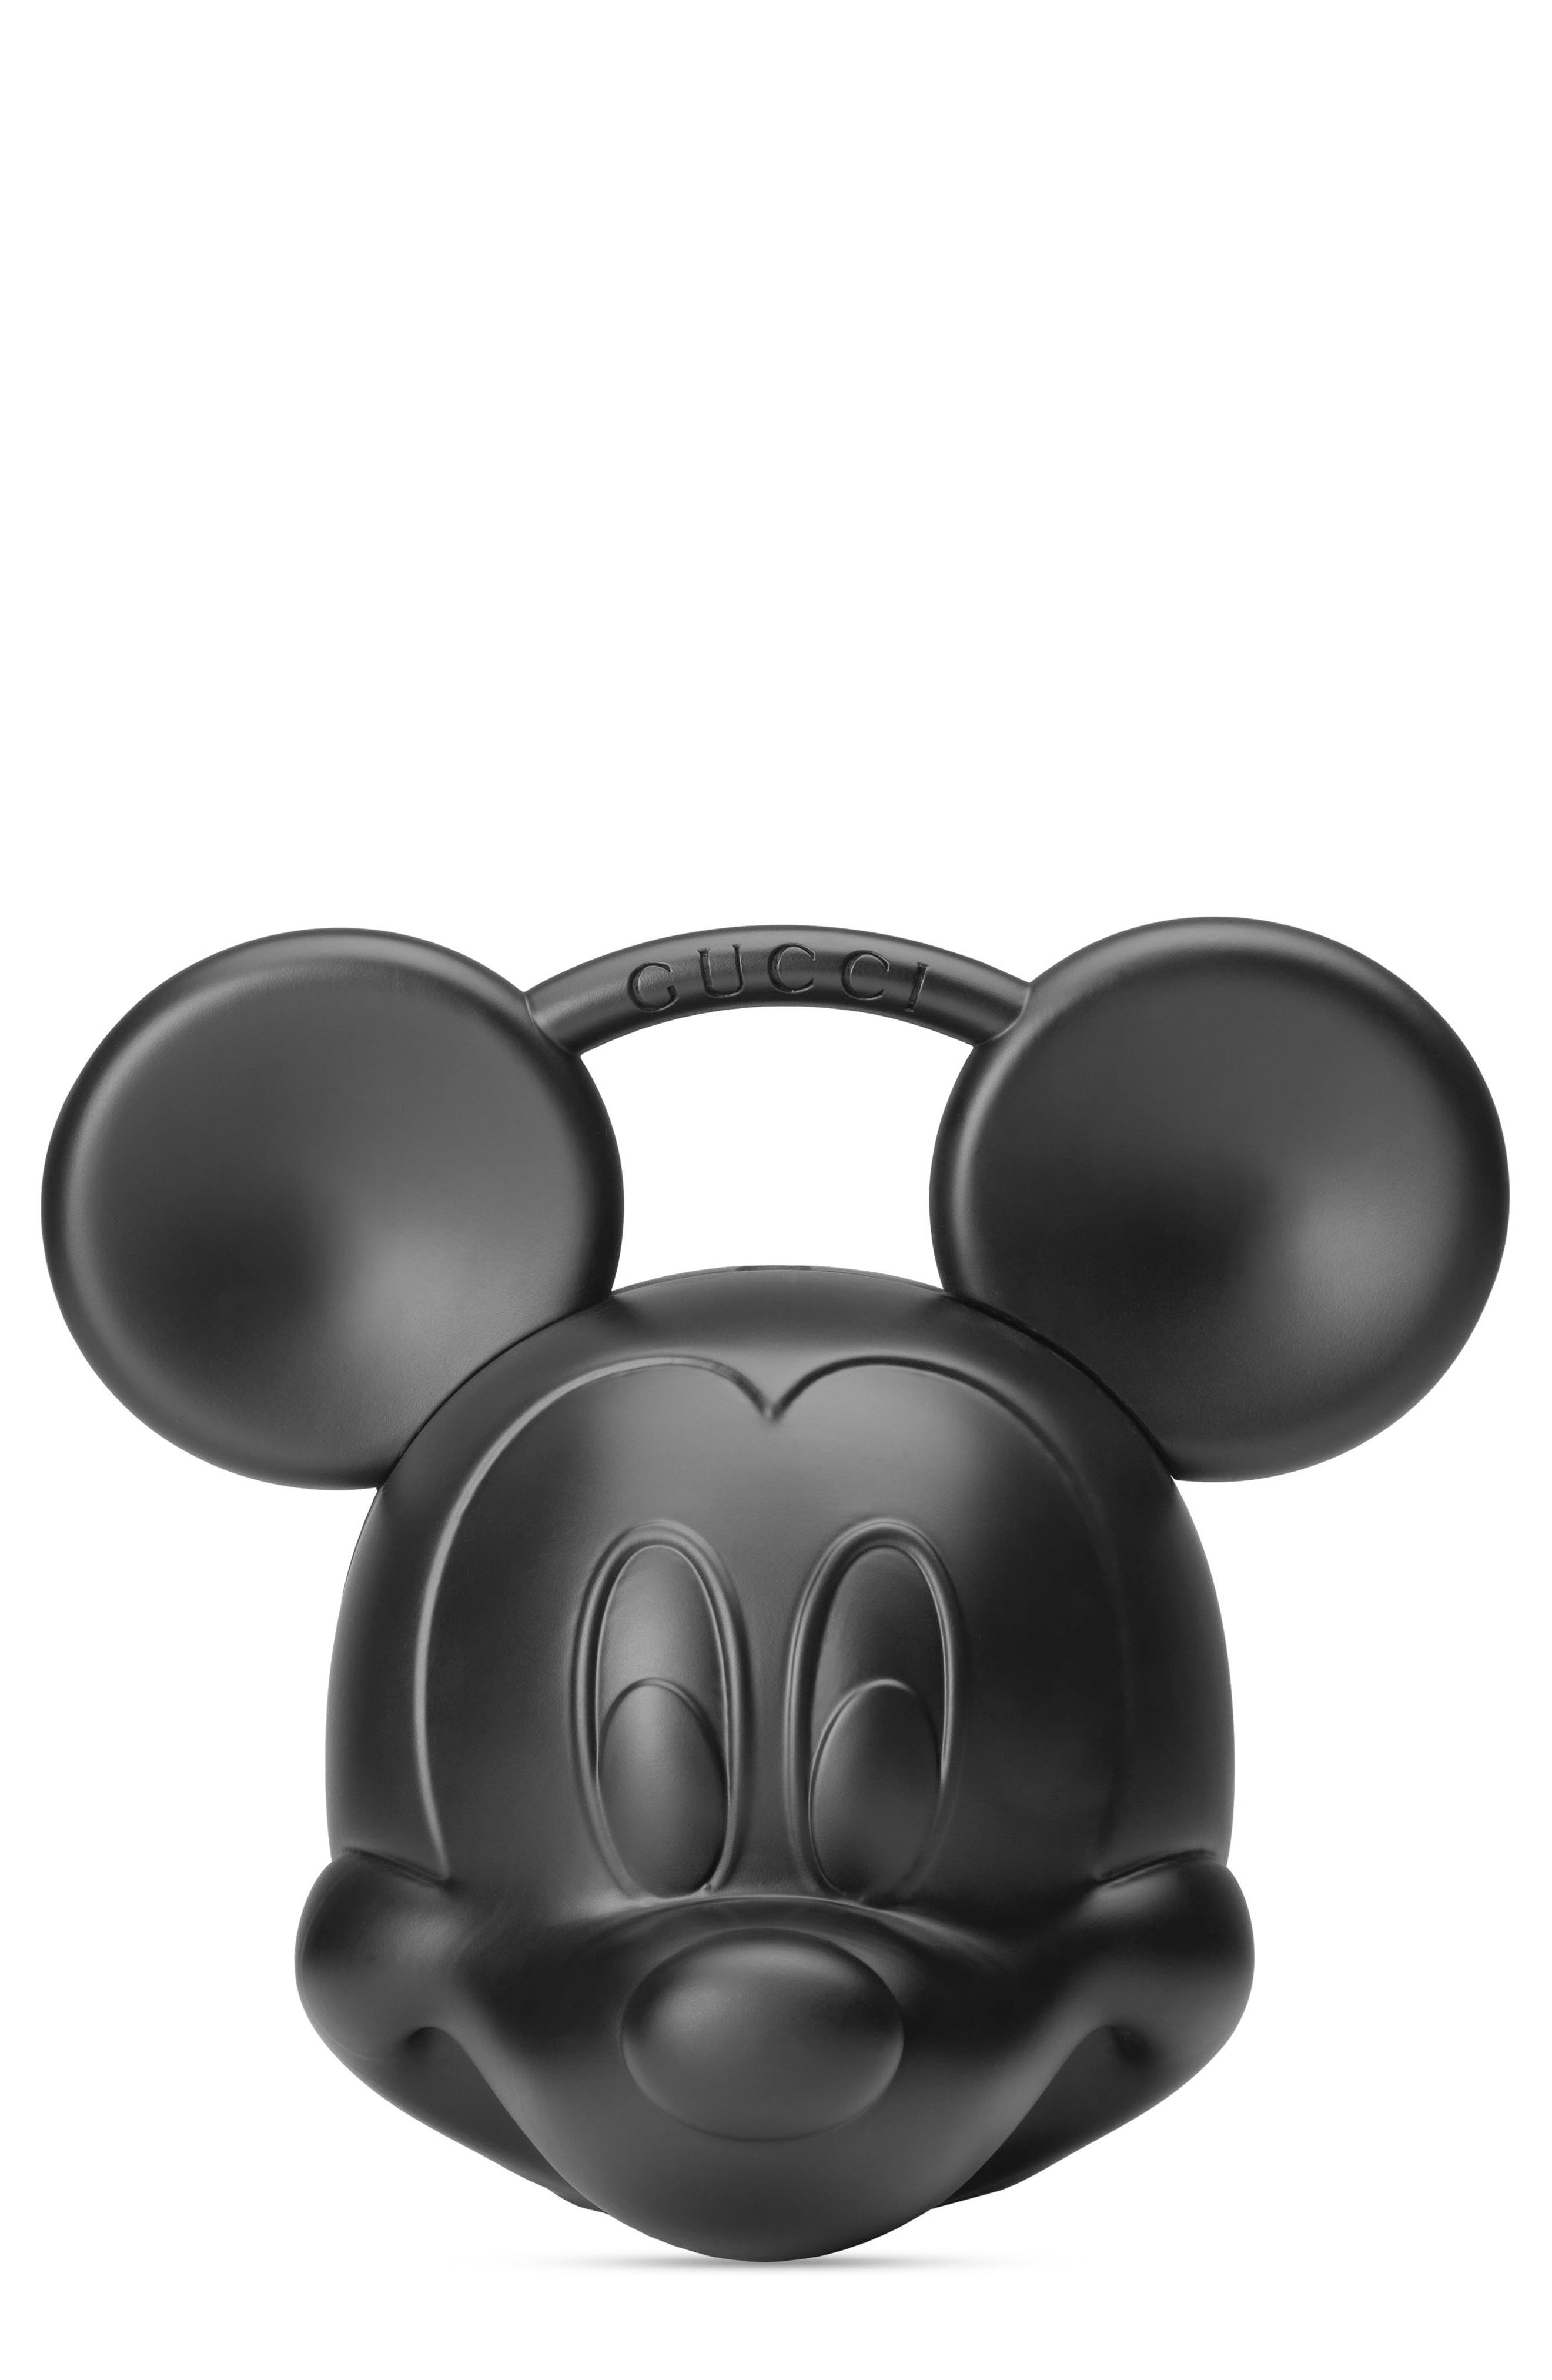 mickey mouse head purse